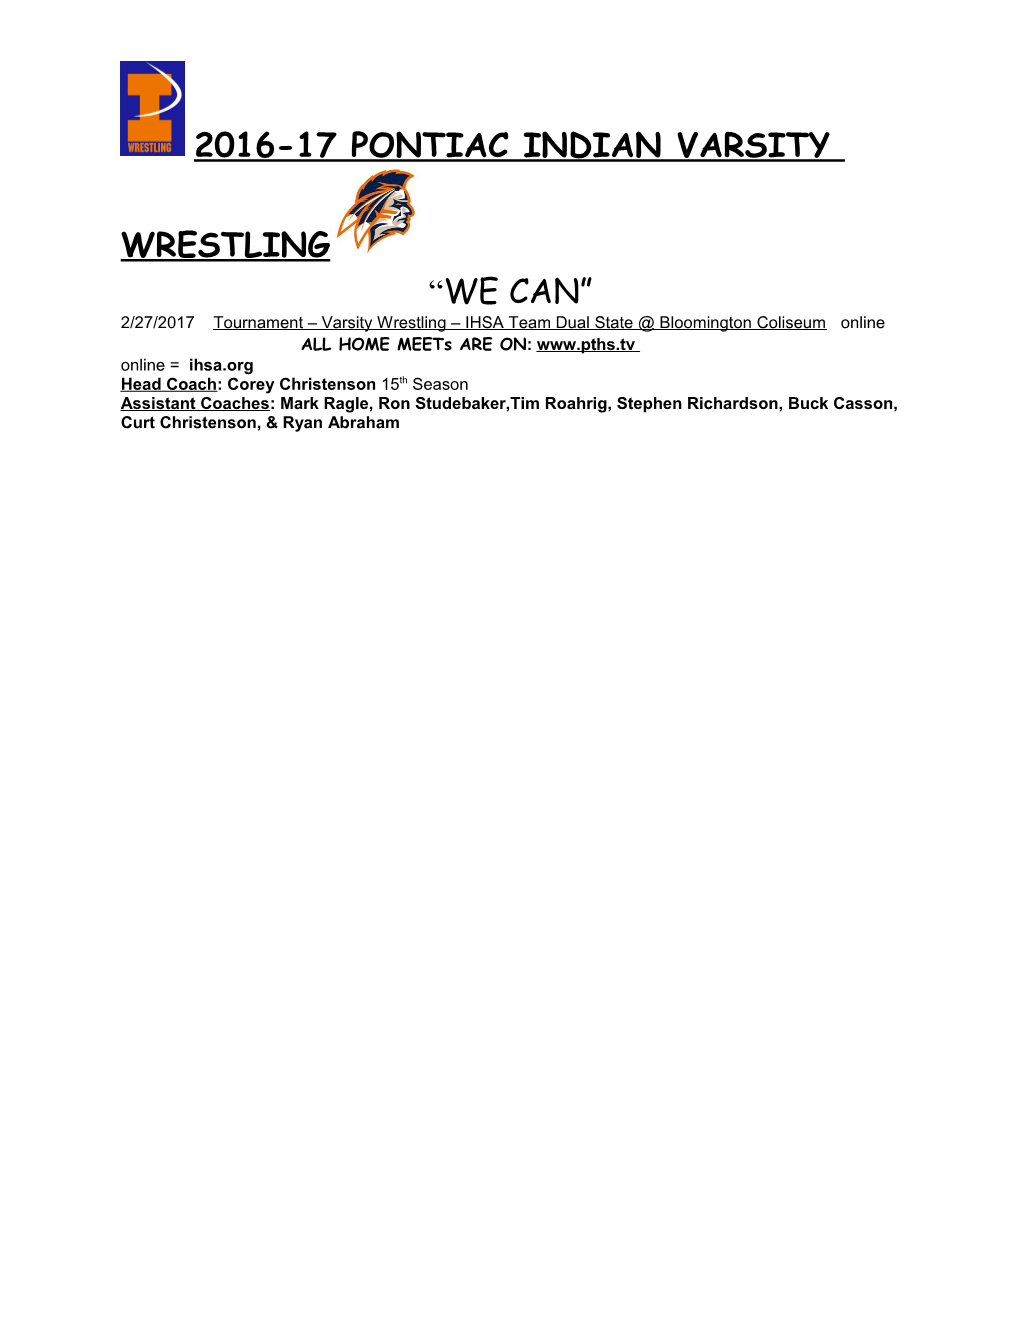 2016-17 Pontiac Indian Varsity Wrestling